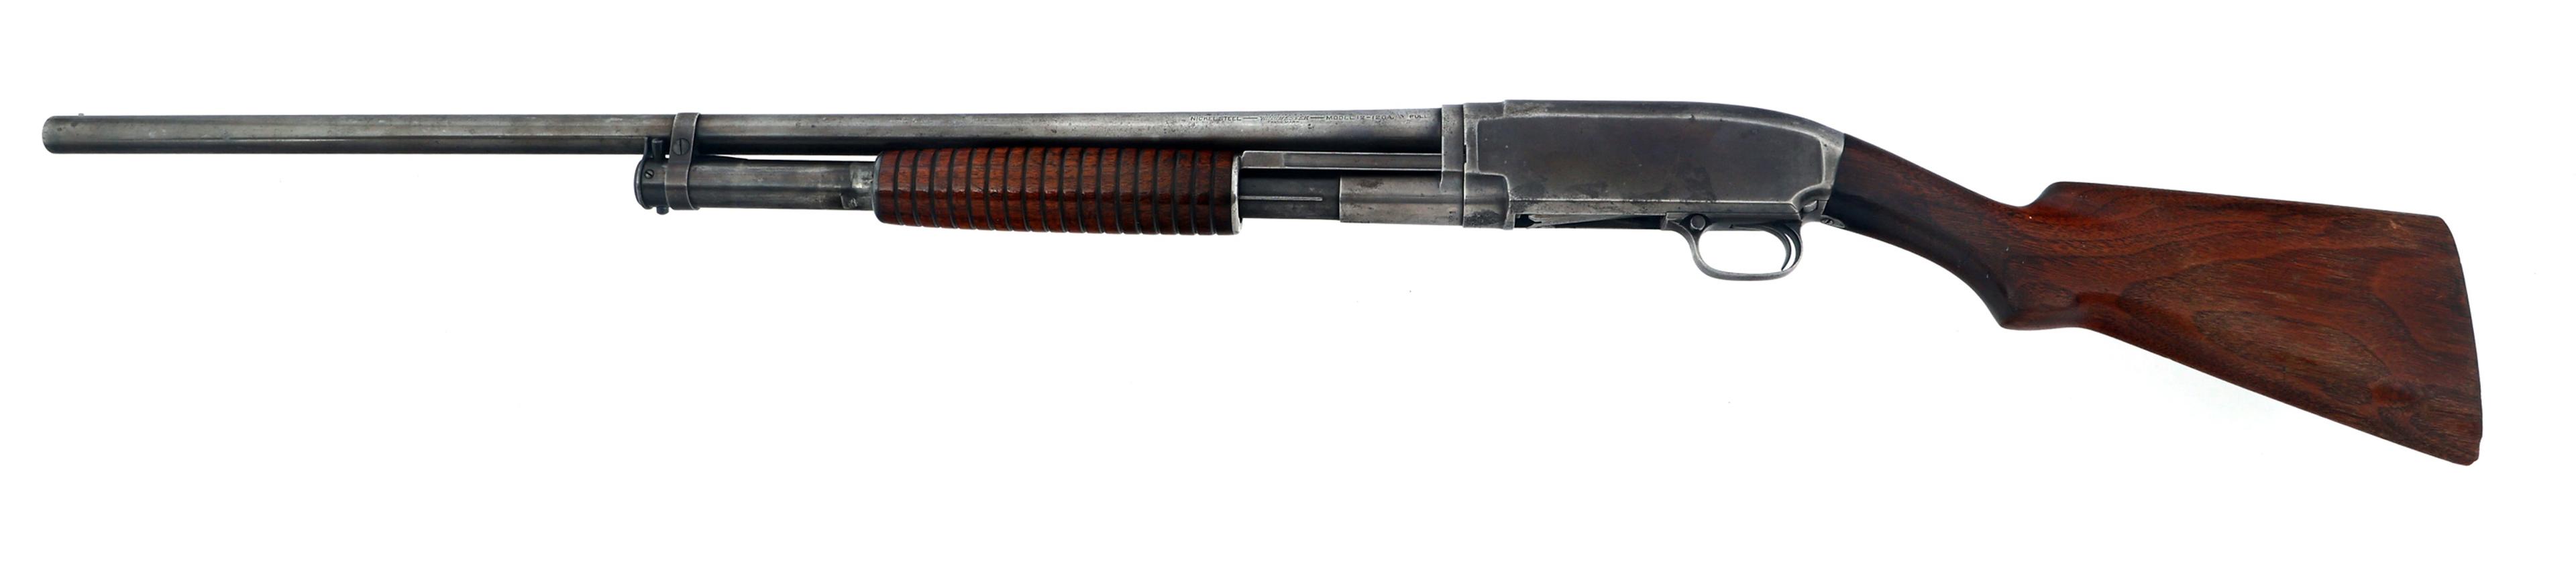 1925 WINCHESTER MODEL 12 12 GAUGE SHOTGUN